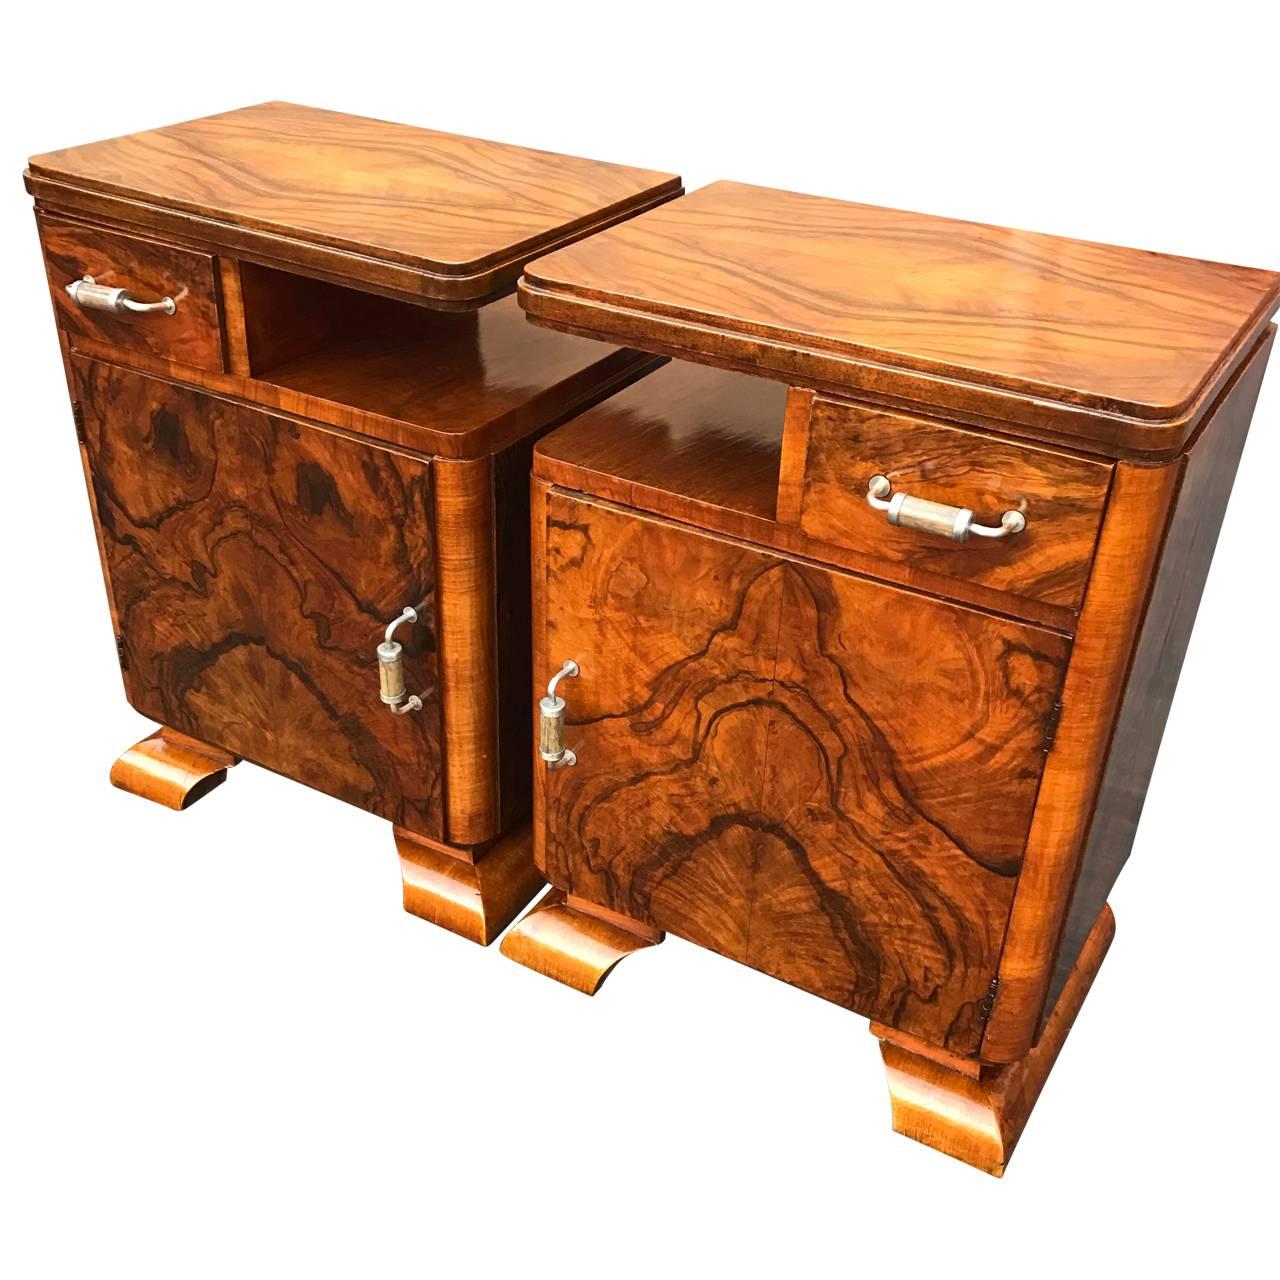 Great pair of Italian deco tables walnut veneer and original brass and bone hardware.